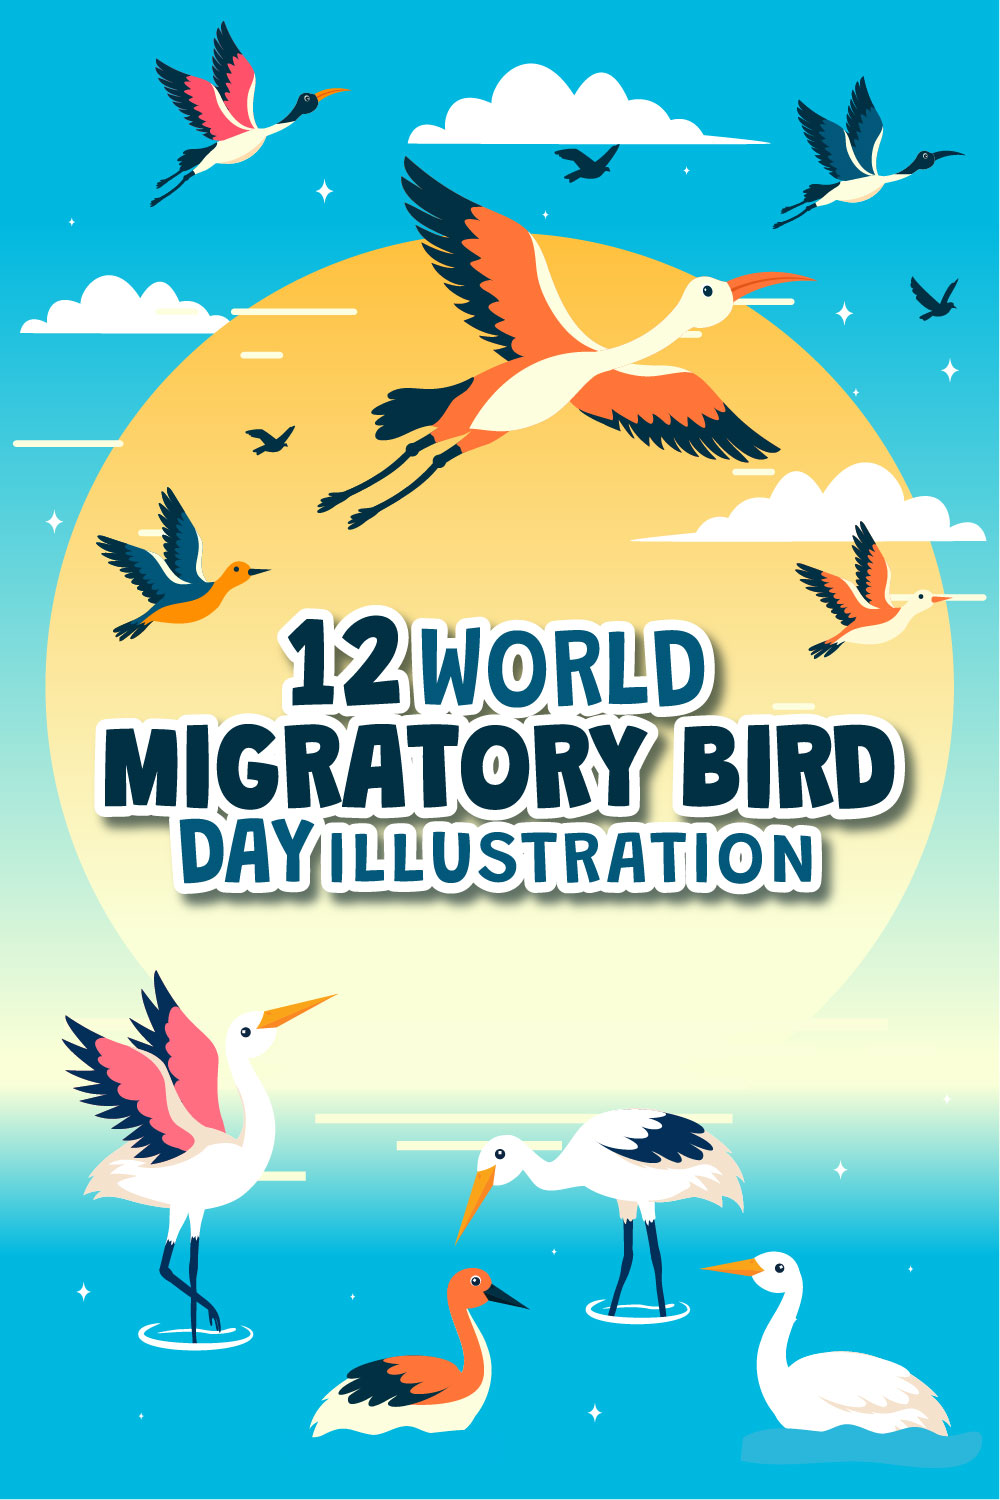 12 World Migratory Bird Day Illustration pinterest preview image.